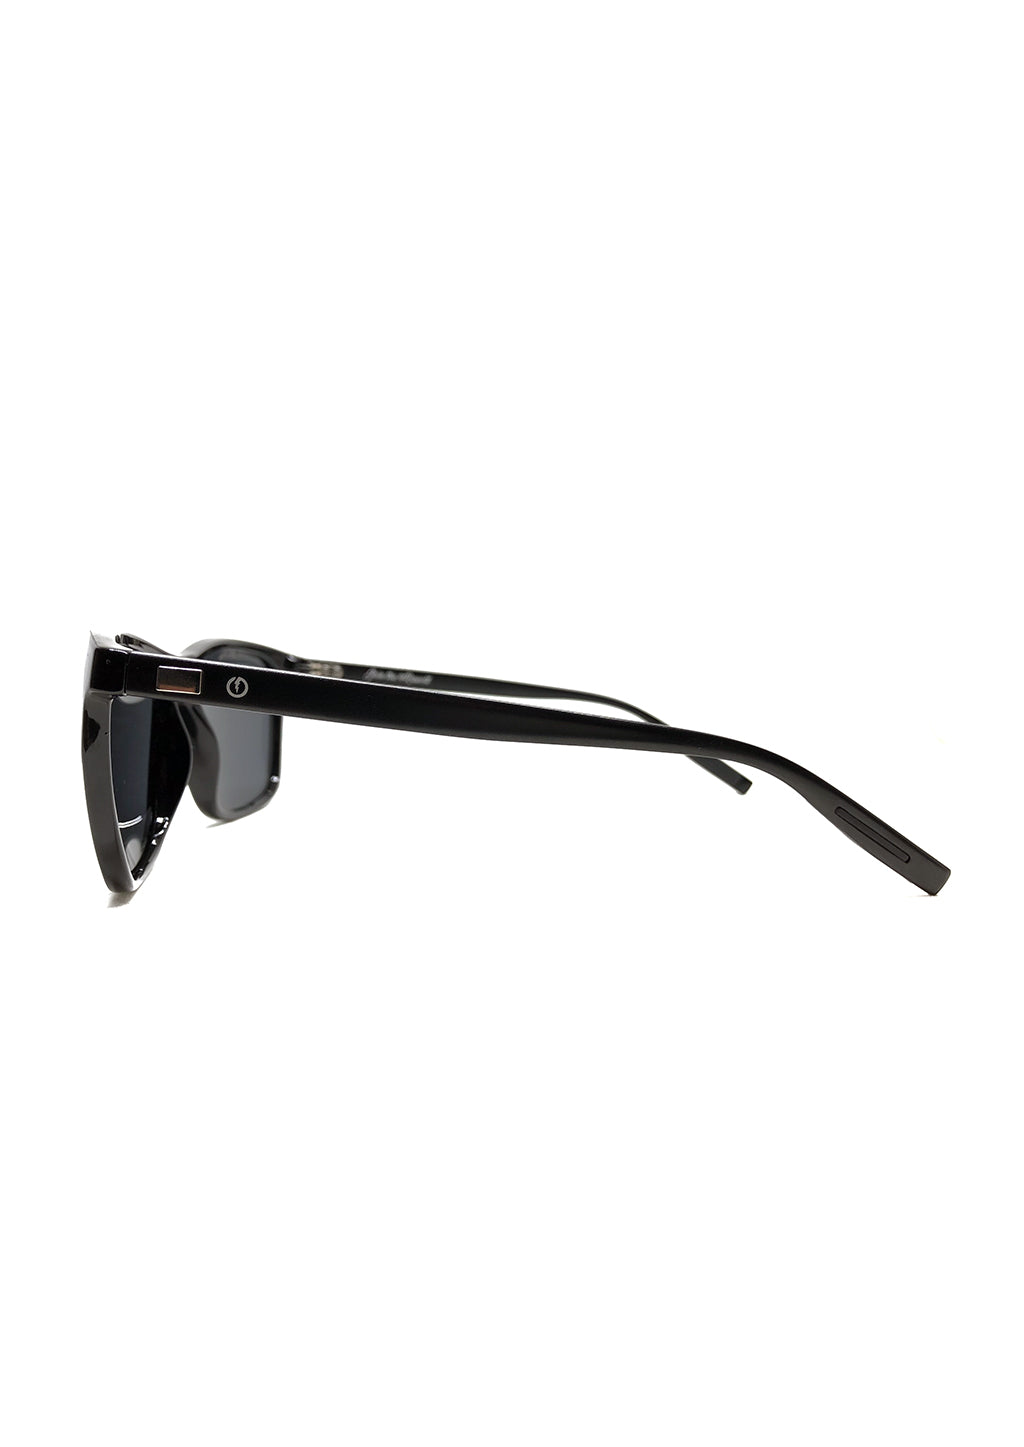 Monti Wayfarer sunglasses - Details